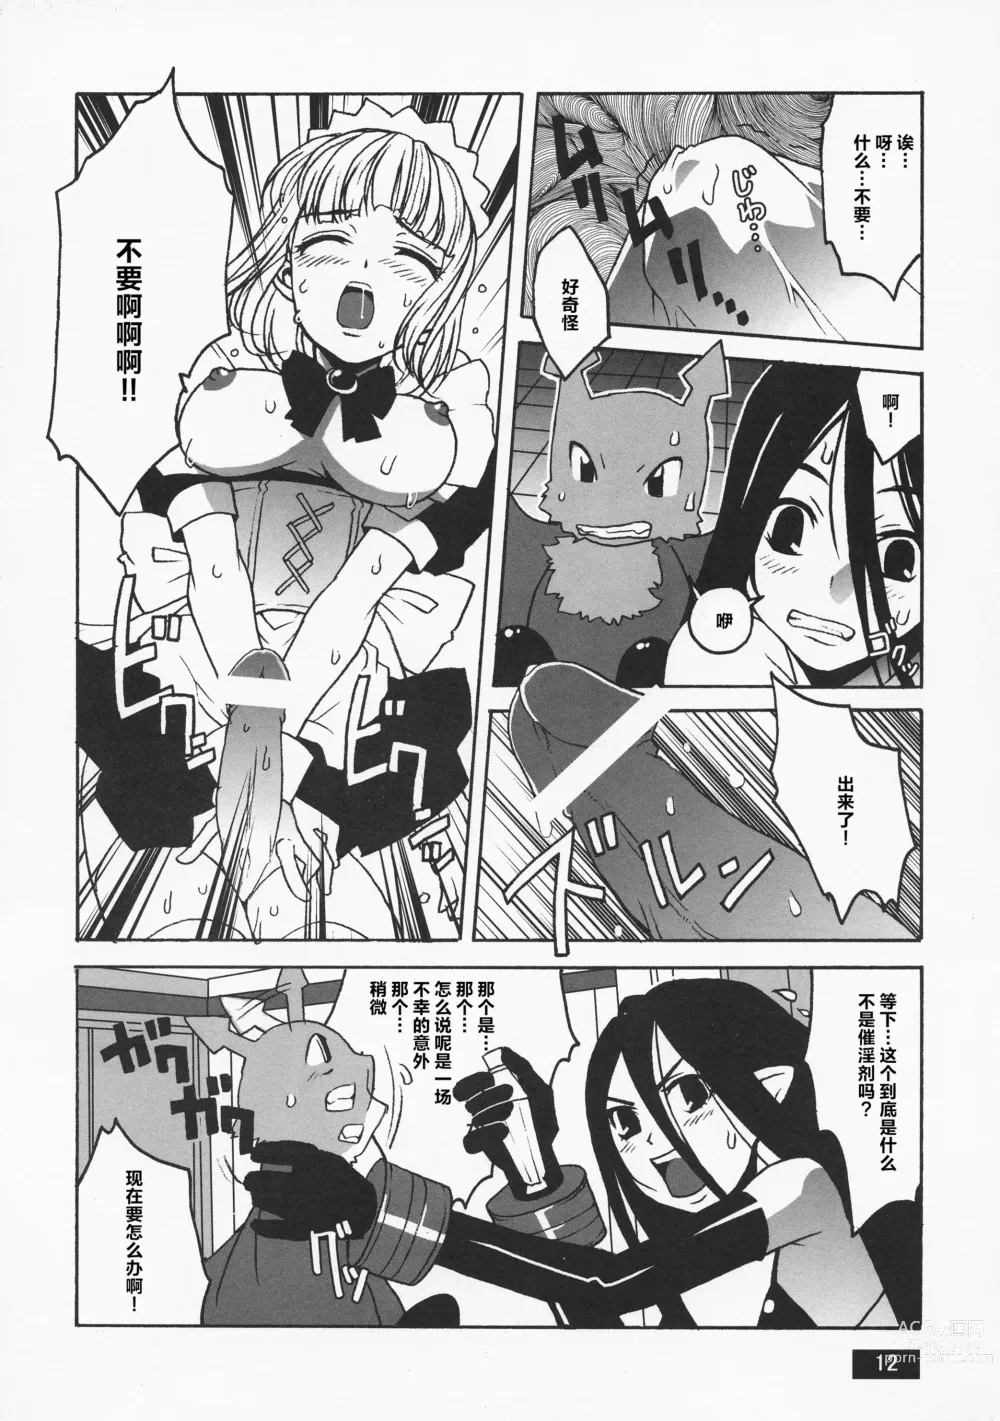 Page 12 of doujinshi HOTPOT